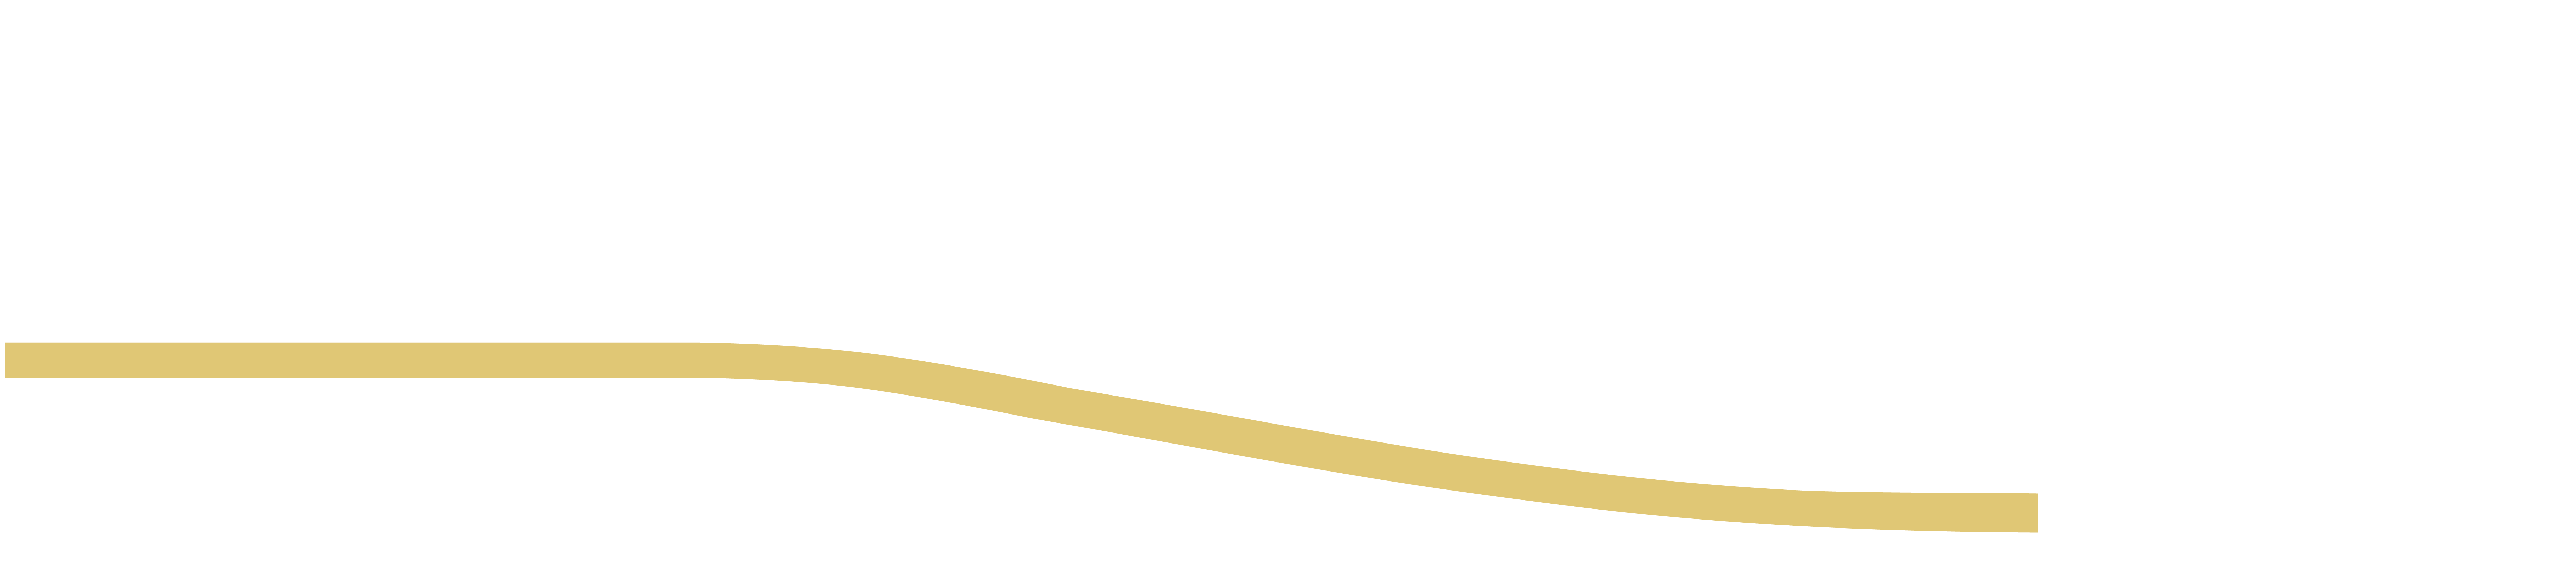 Logo GabrielPro